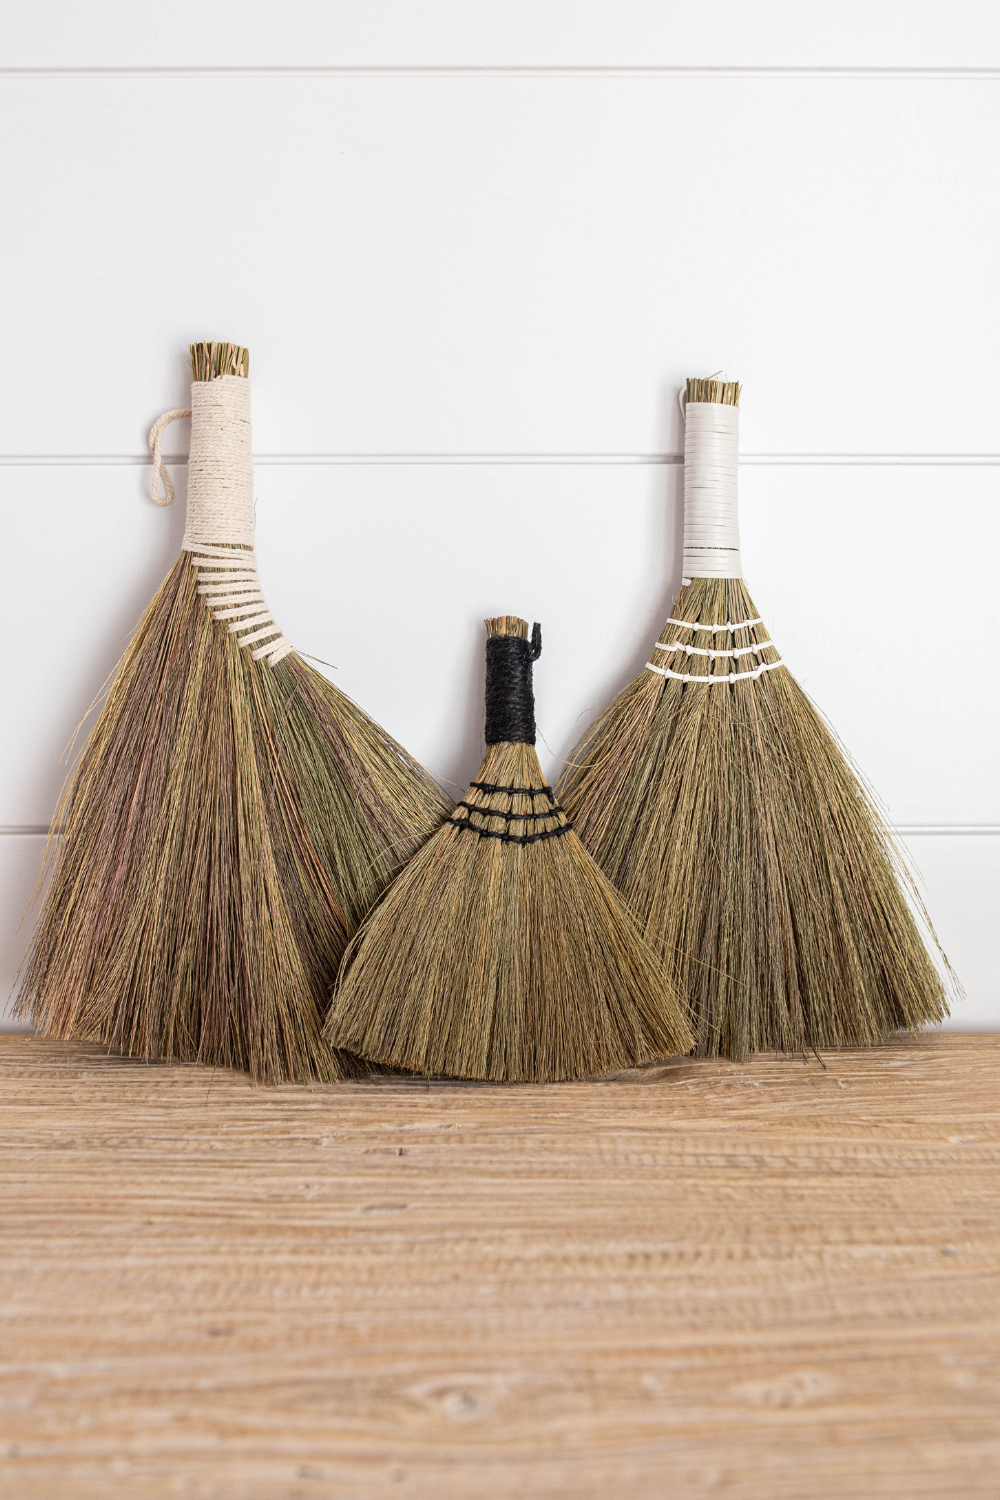 Handmade Brooms Small Black - Luxe B Co